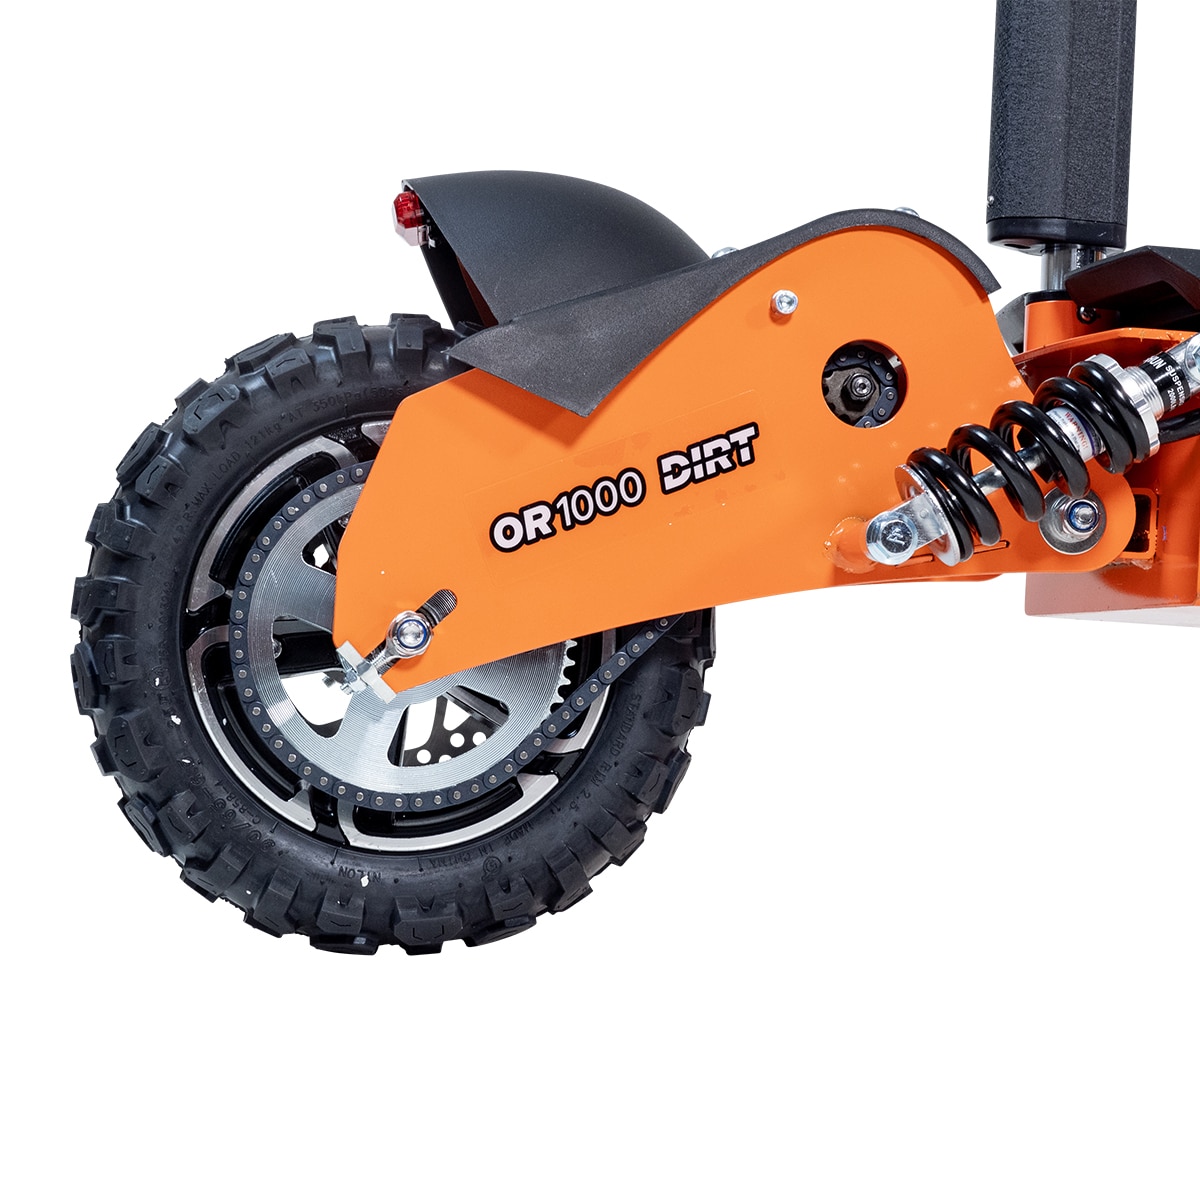 Elscooter Nitrox OR1000 Dirt